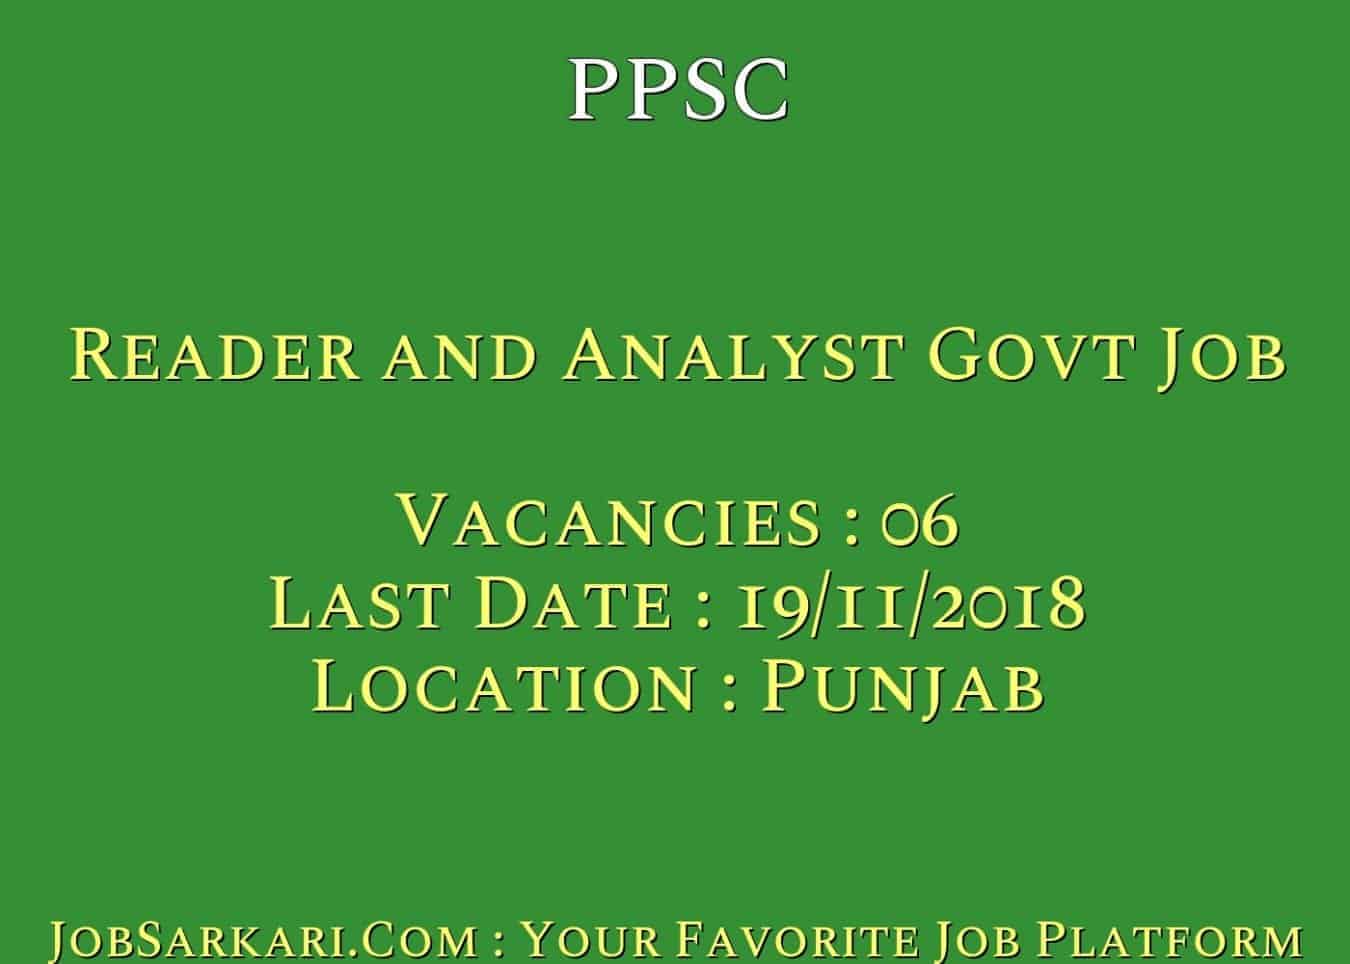 PPSC Recruitment 2018 for Reader and Analyst Govt Job